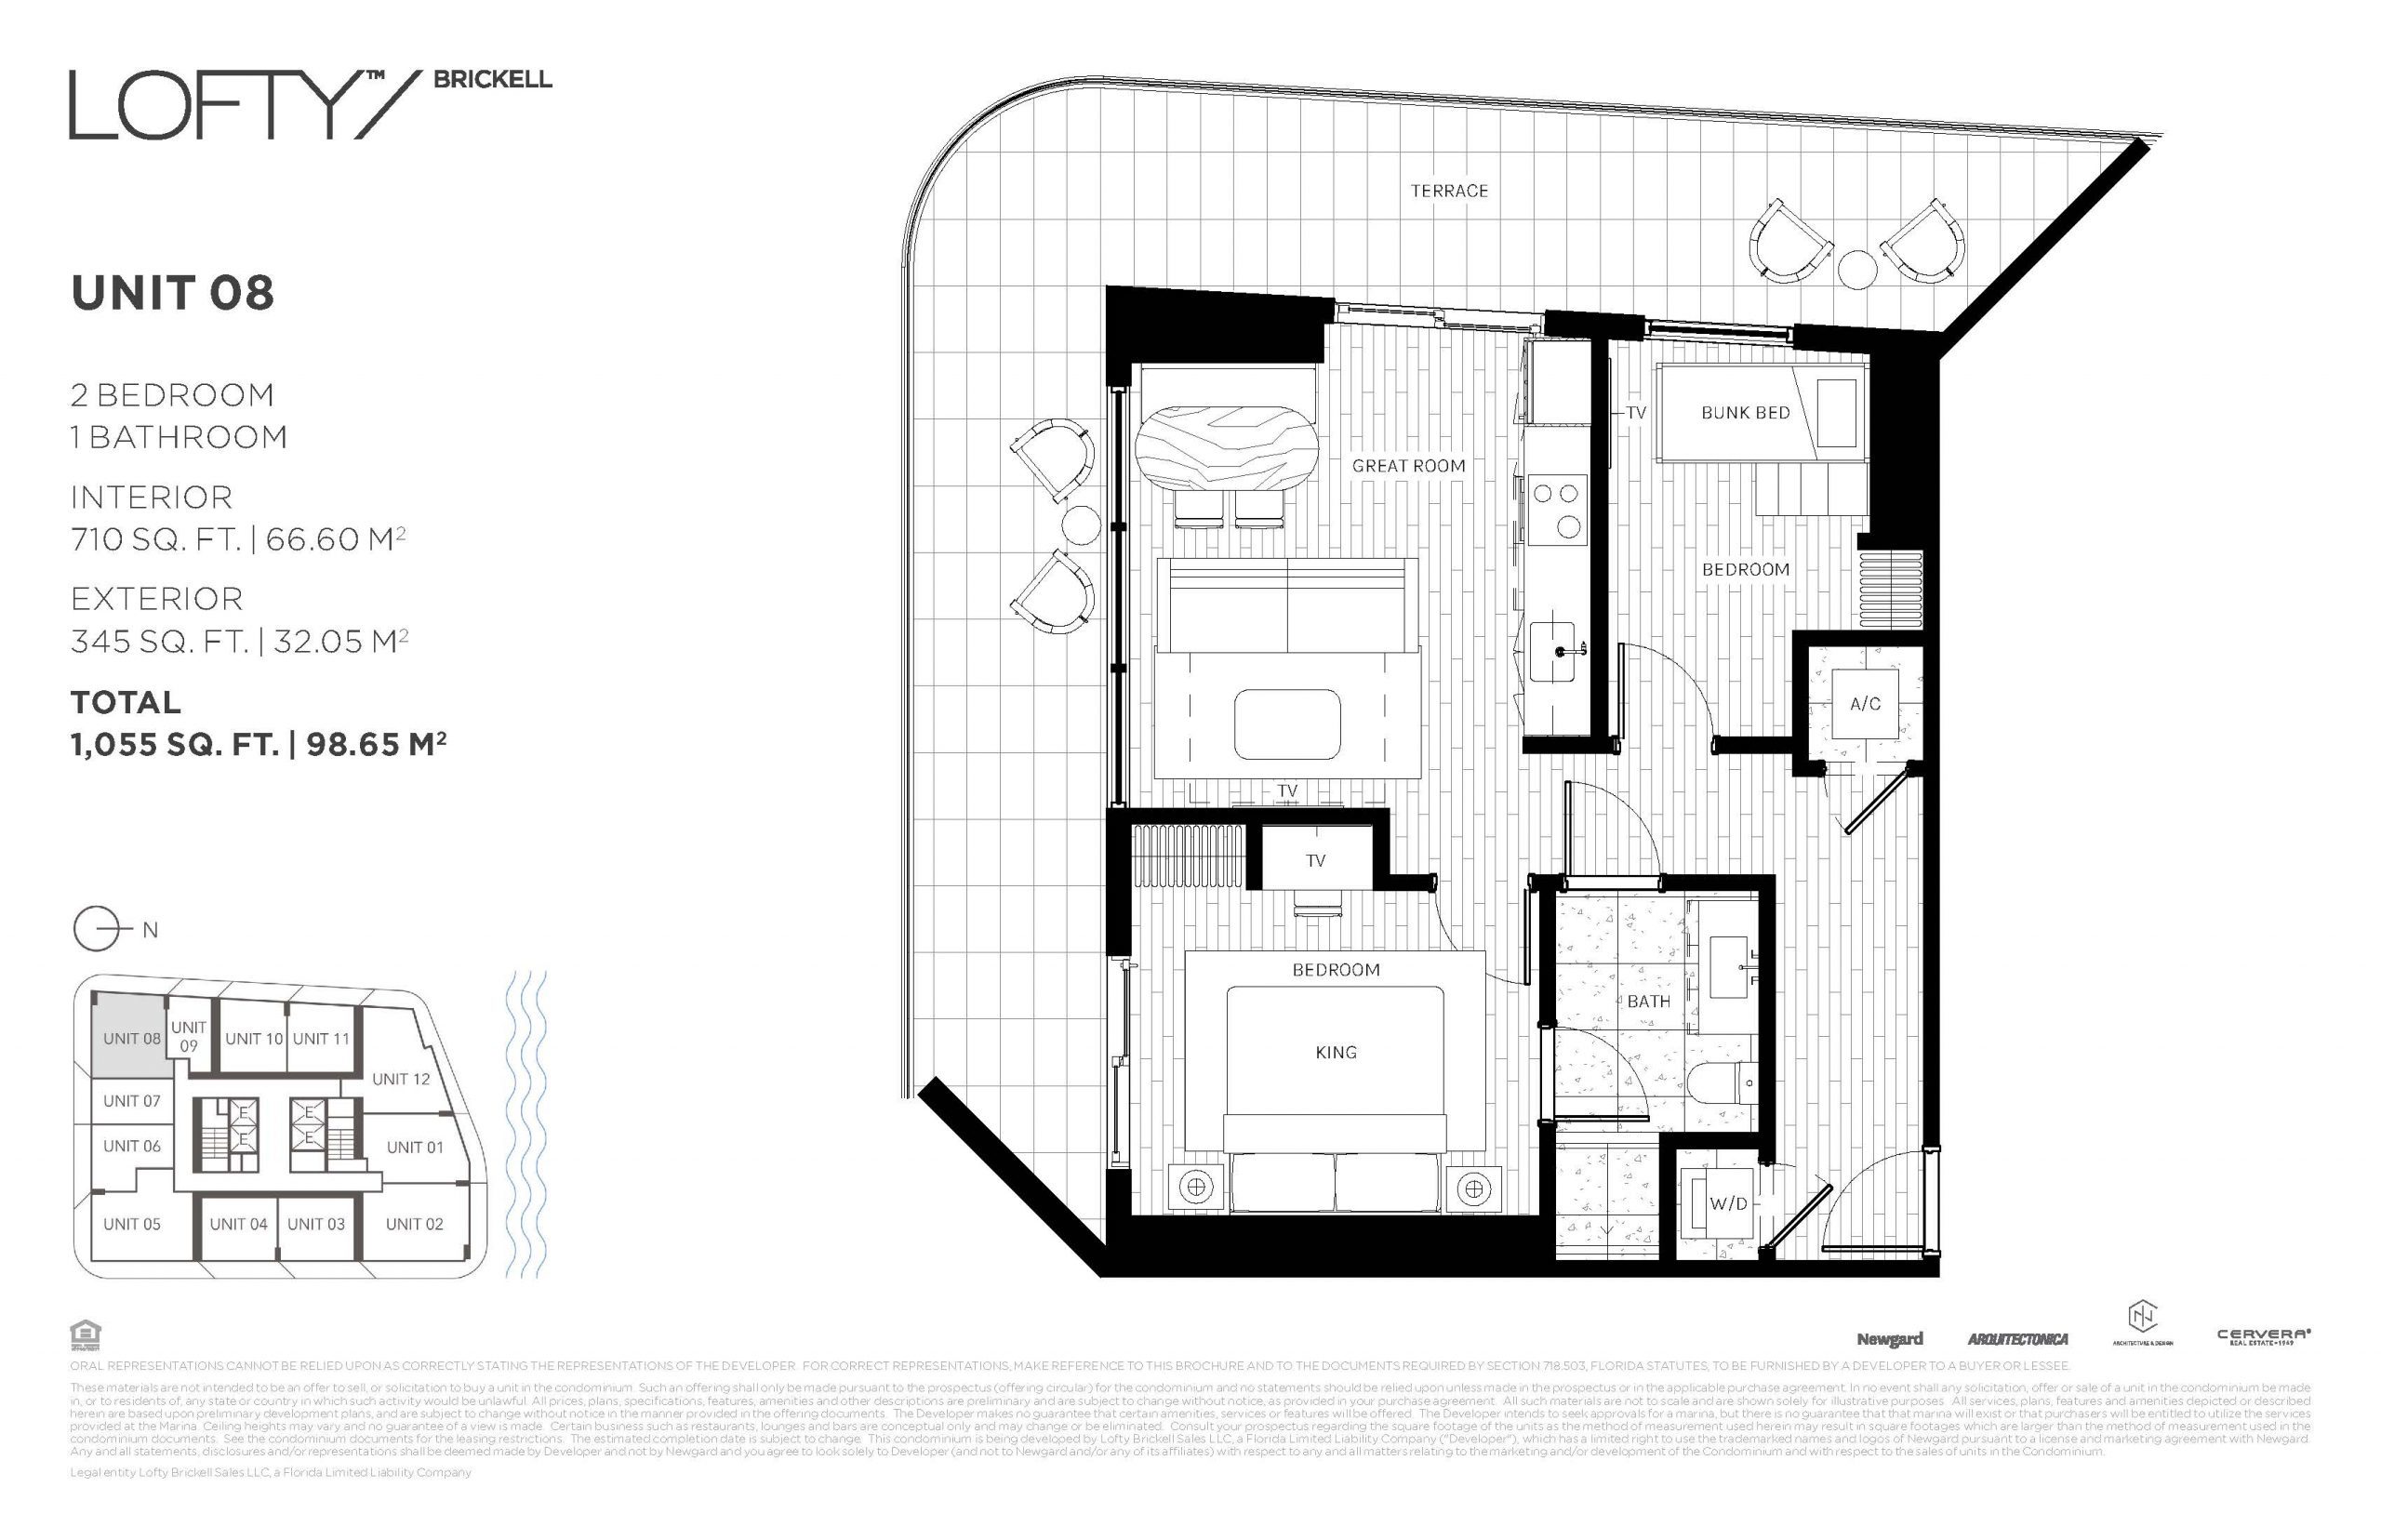 Floor Plan for Lofty Brickell Floorplans, Unit 08